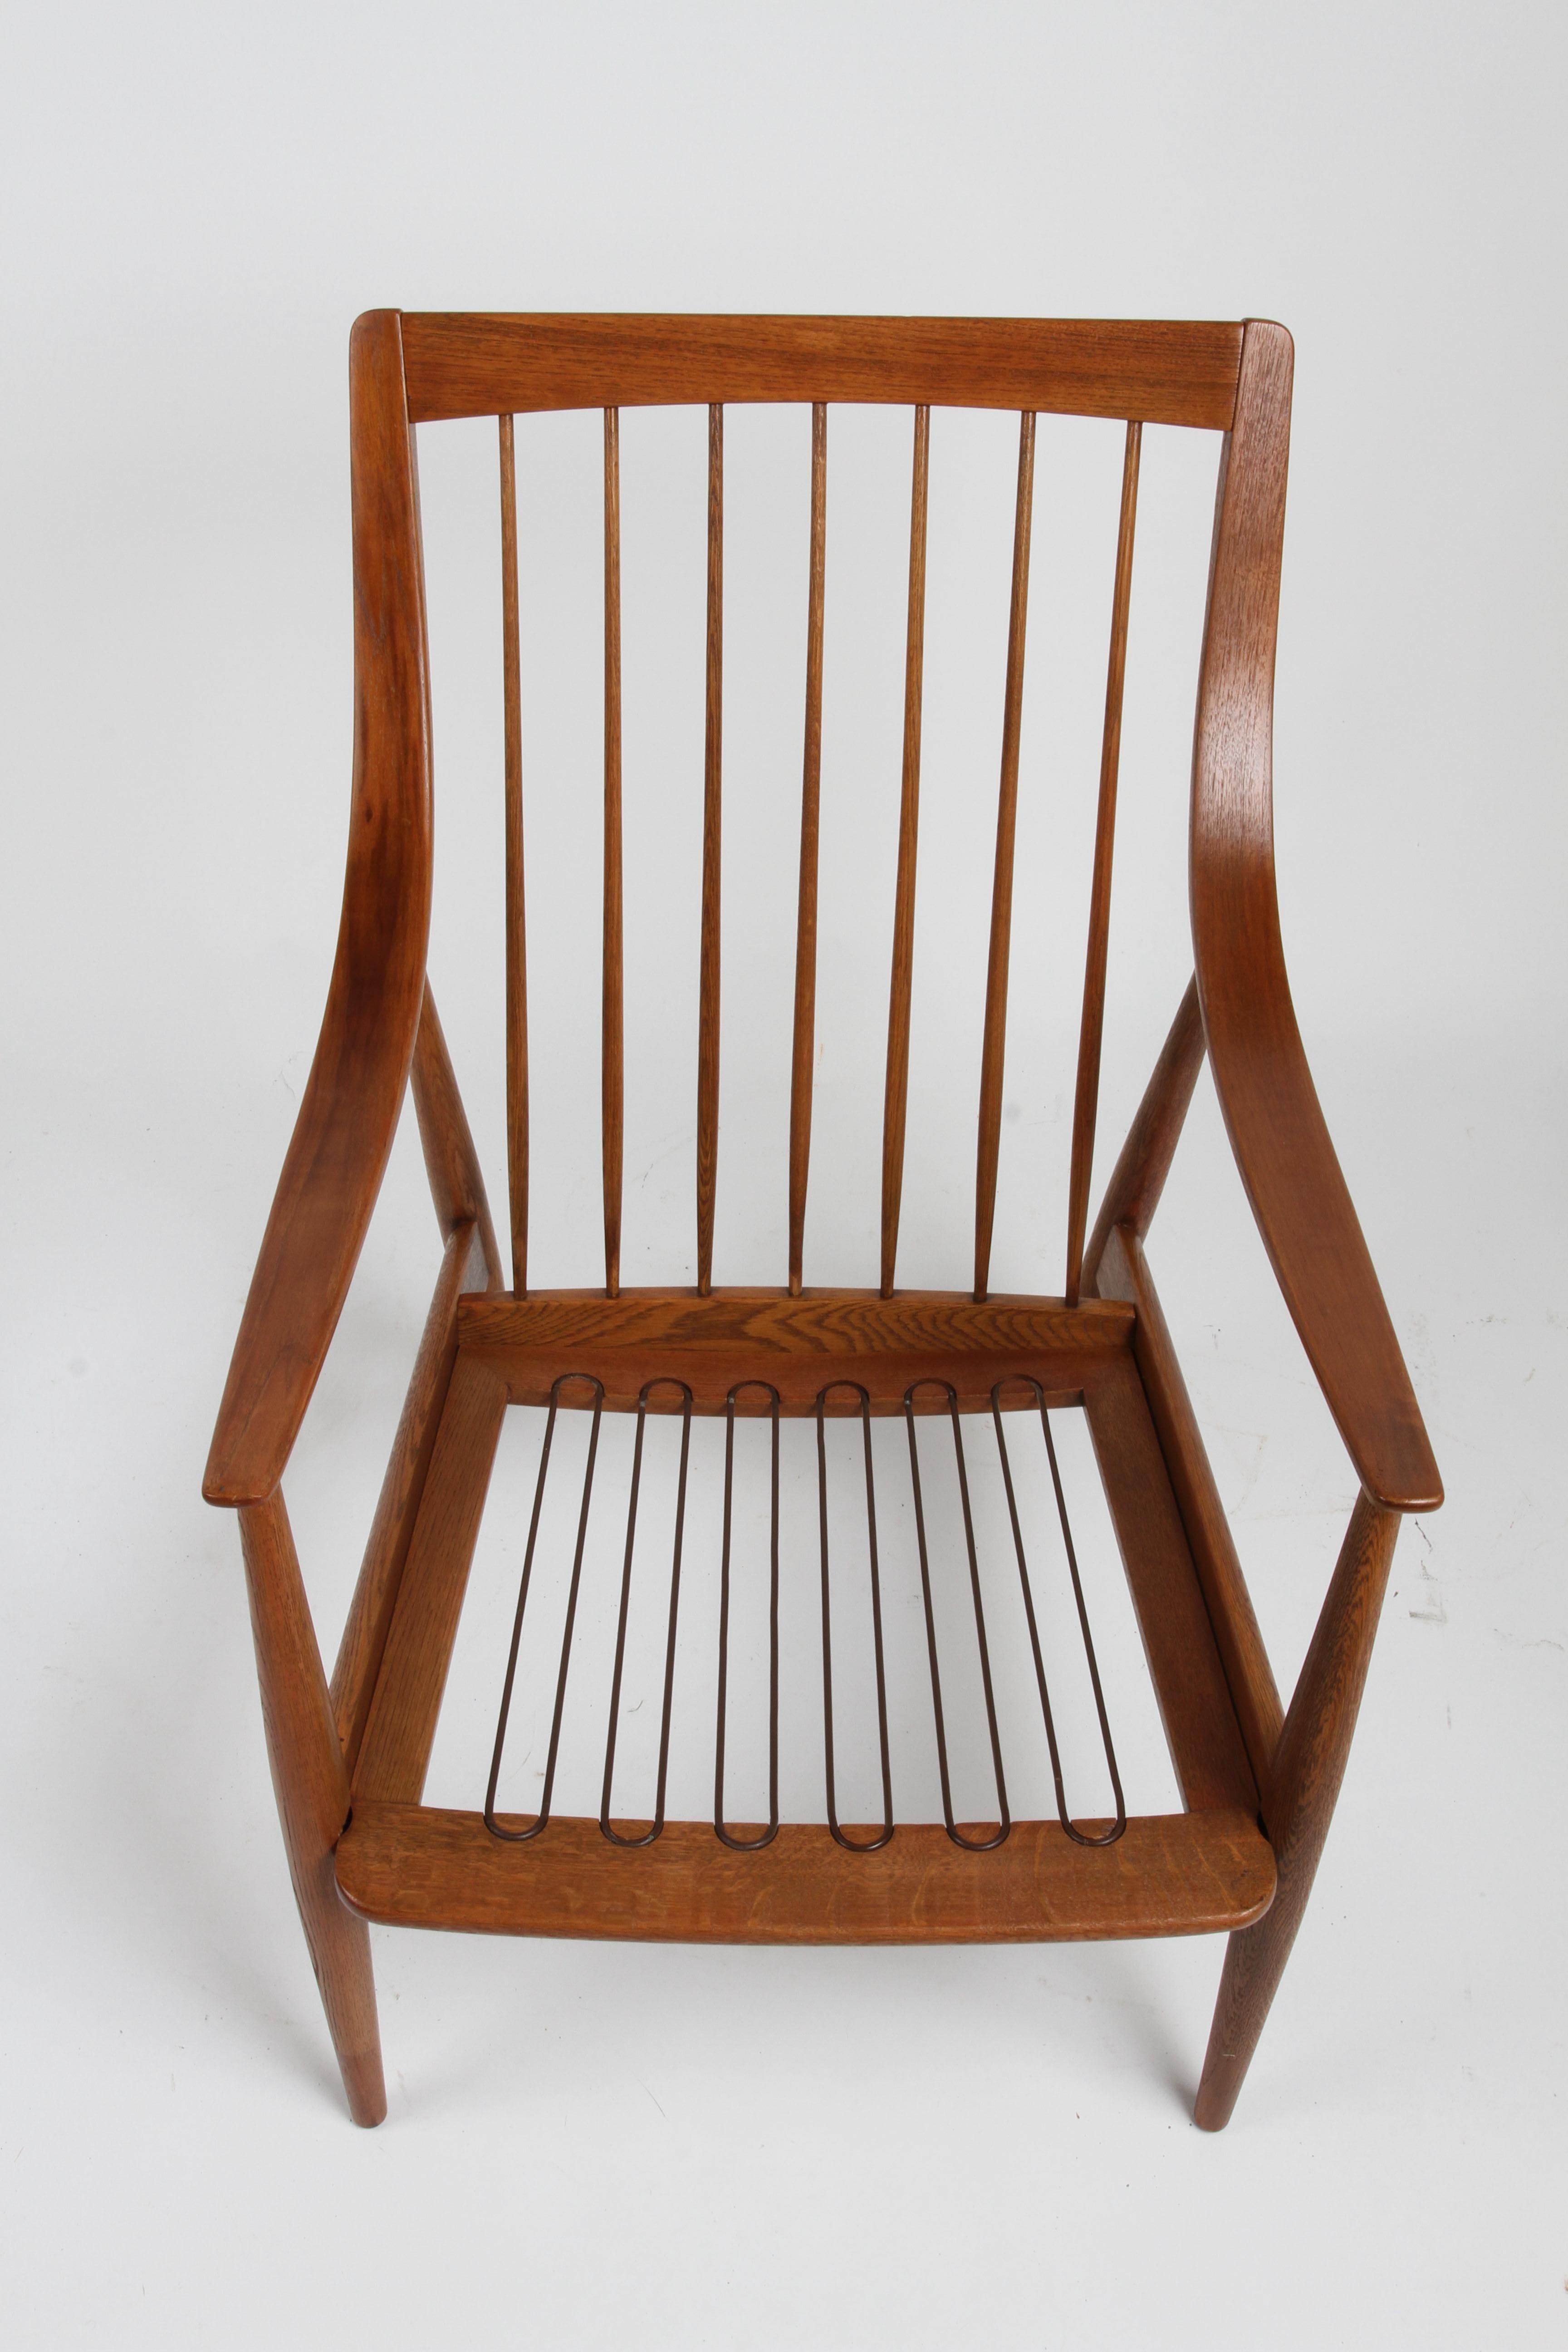 Peter Hvidt & Orla Molgaard Nielsen Danish Modern High Back Lounge Chair FD-145 For Sale 9